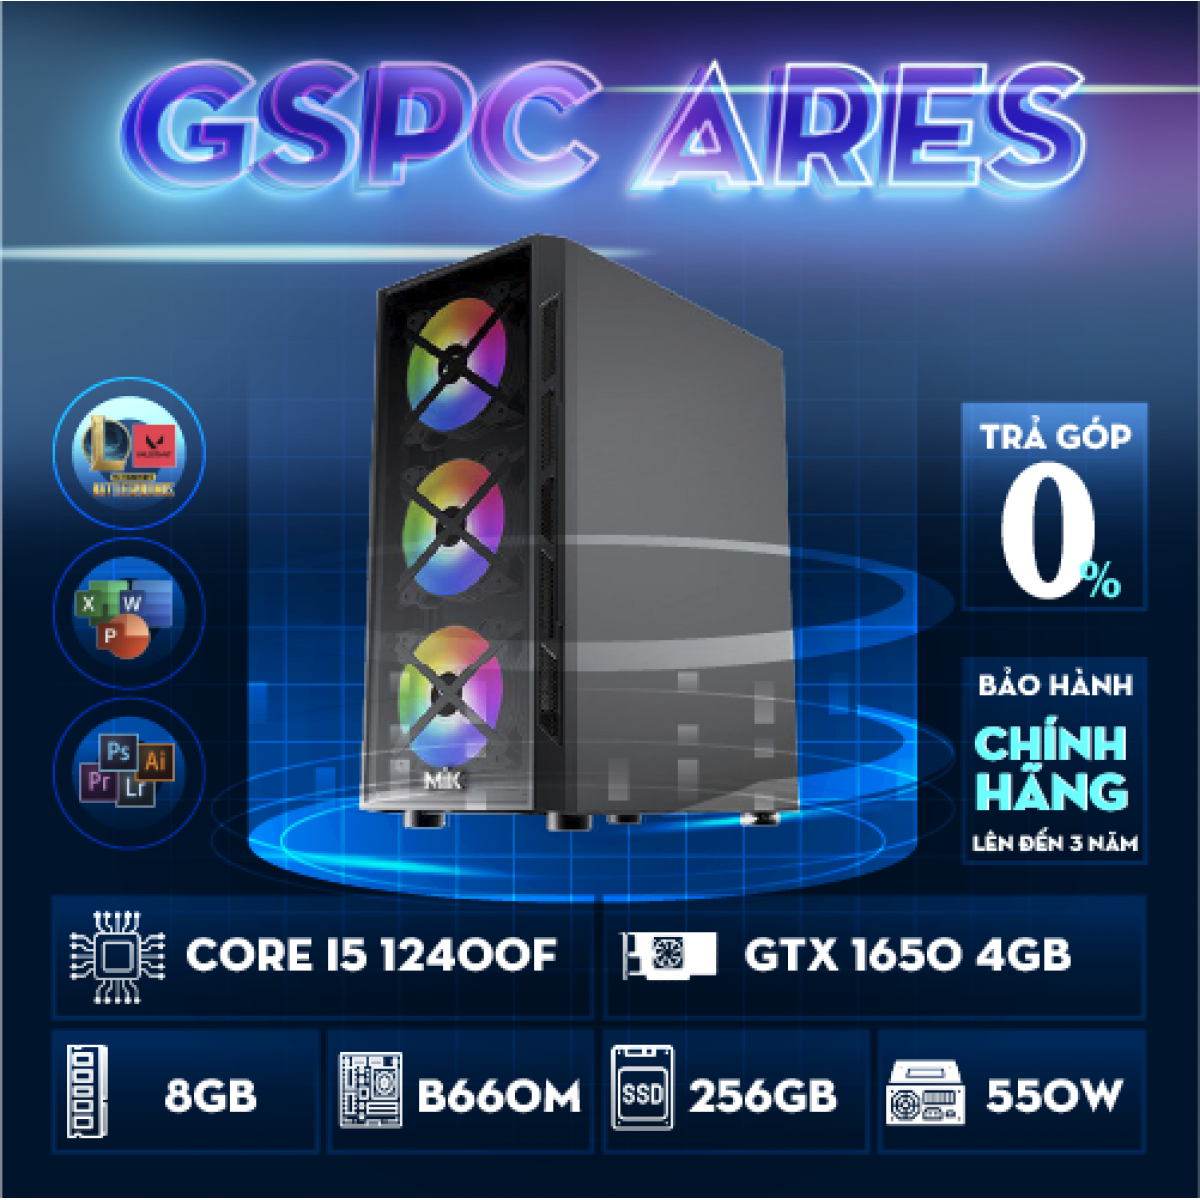 GSPC Ares ( i5 12400f - B660M - 8GB - GTX 1650 - 256GB)